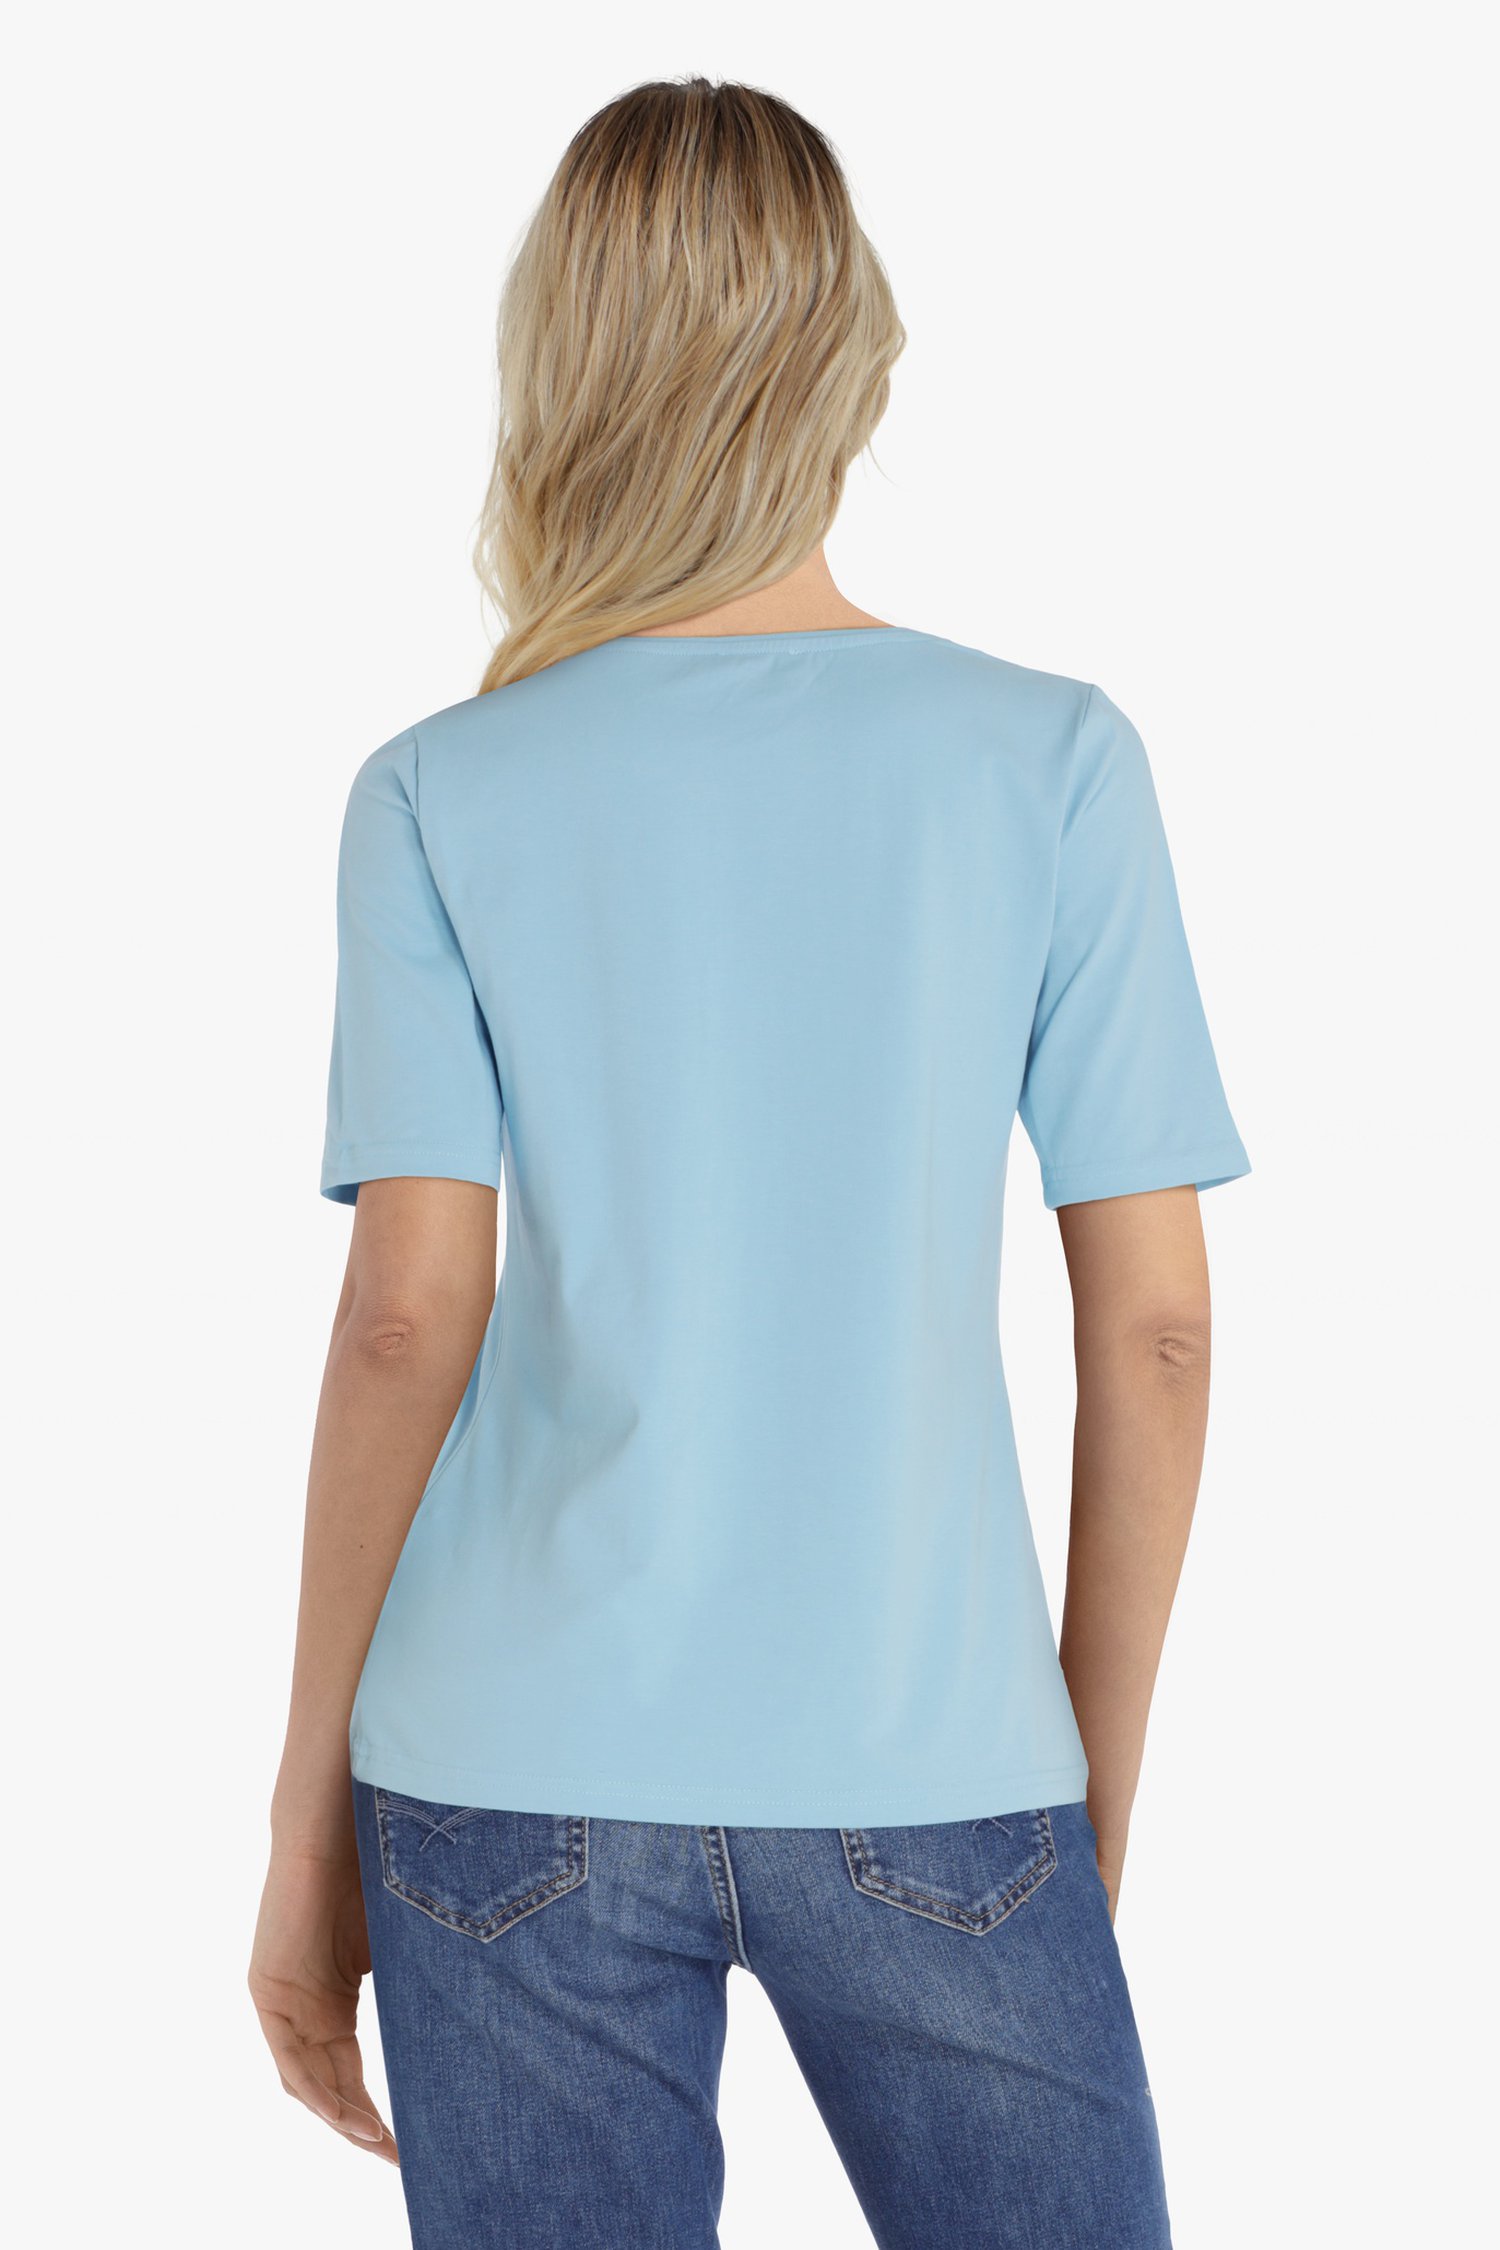 T-shirt bleu clair de Liberty Island pour Femmes